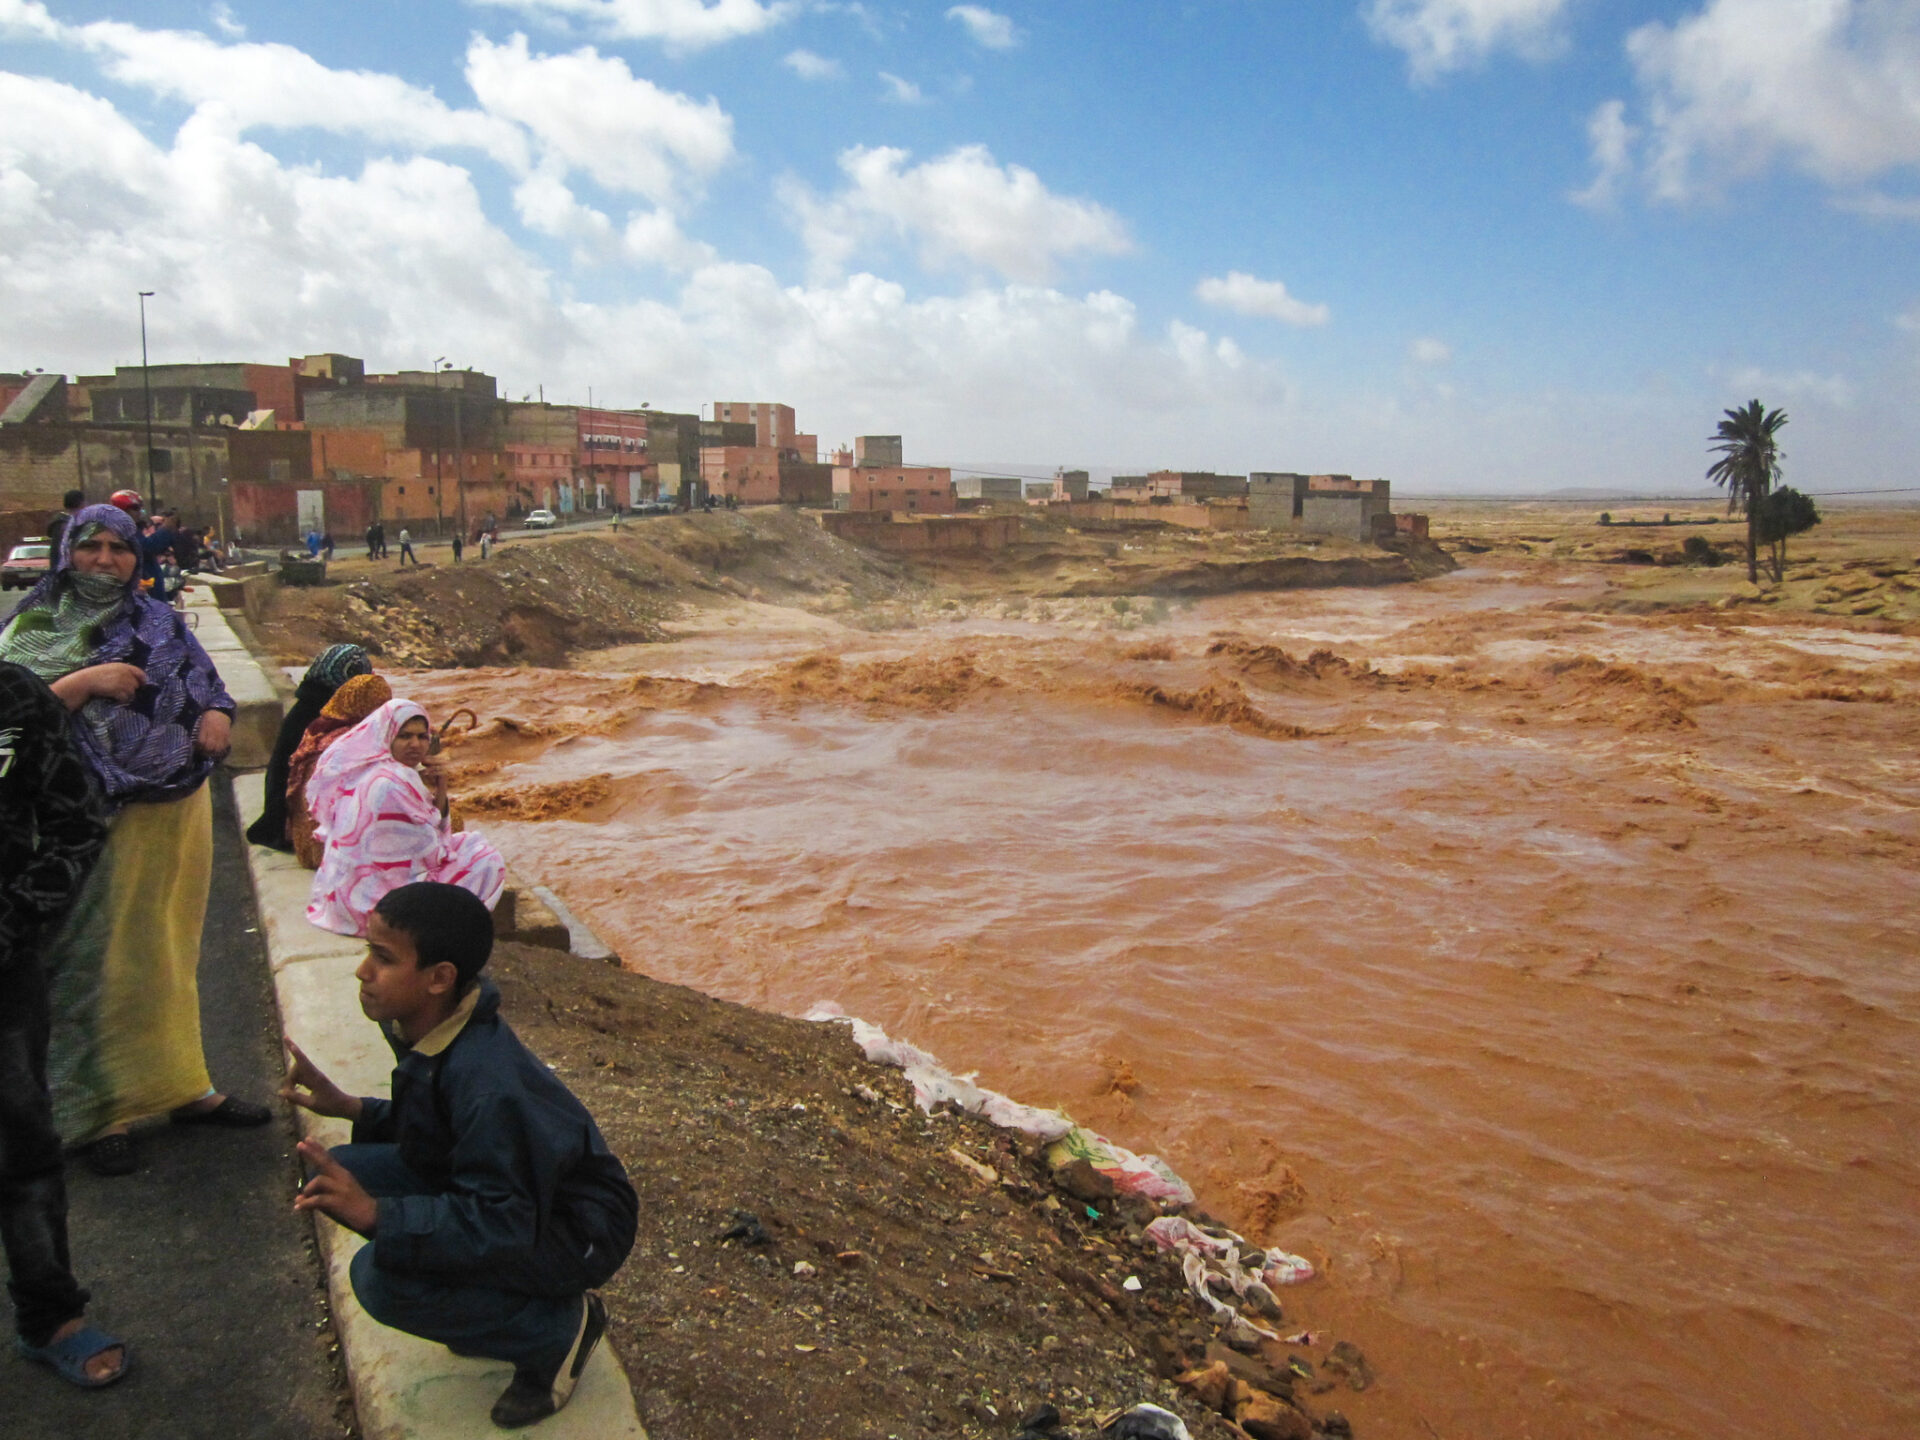 Floods in Guelmim, Morocco in March 2013 (Credit: jbdodane; https://www.flickr.com/photos/jbdodane/).